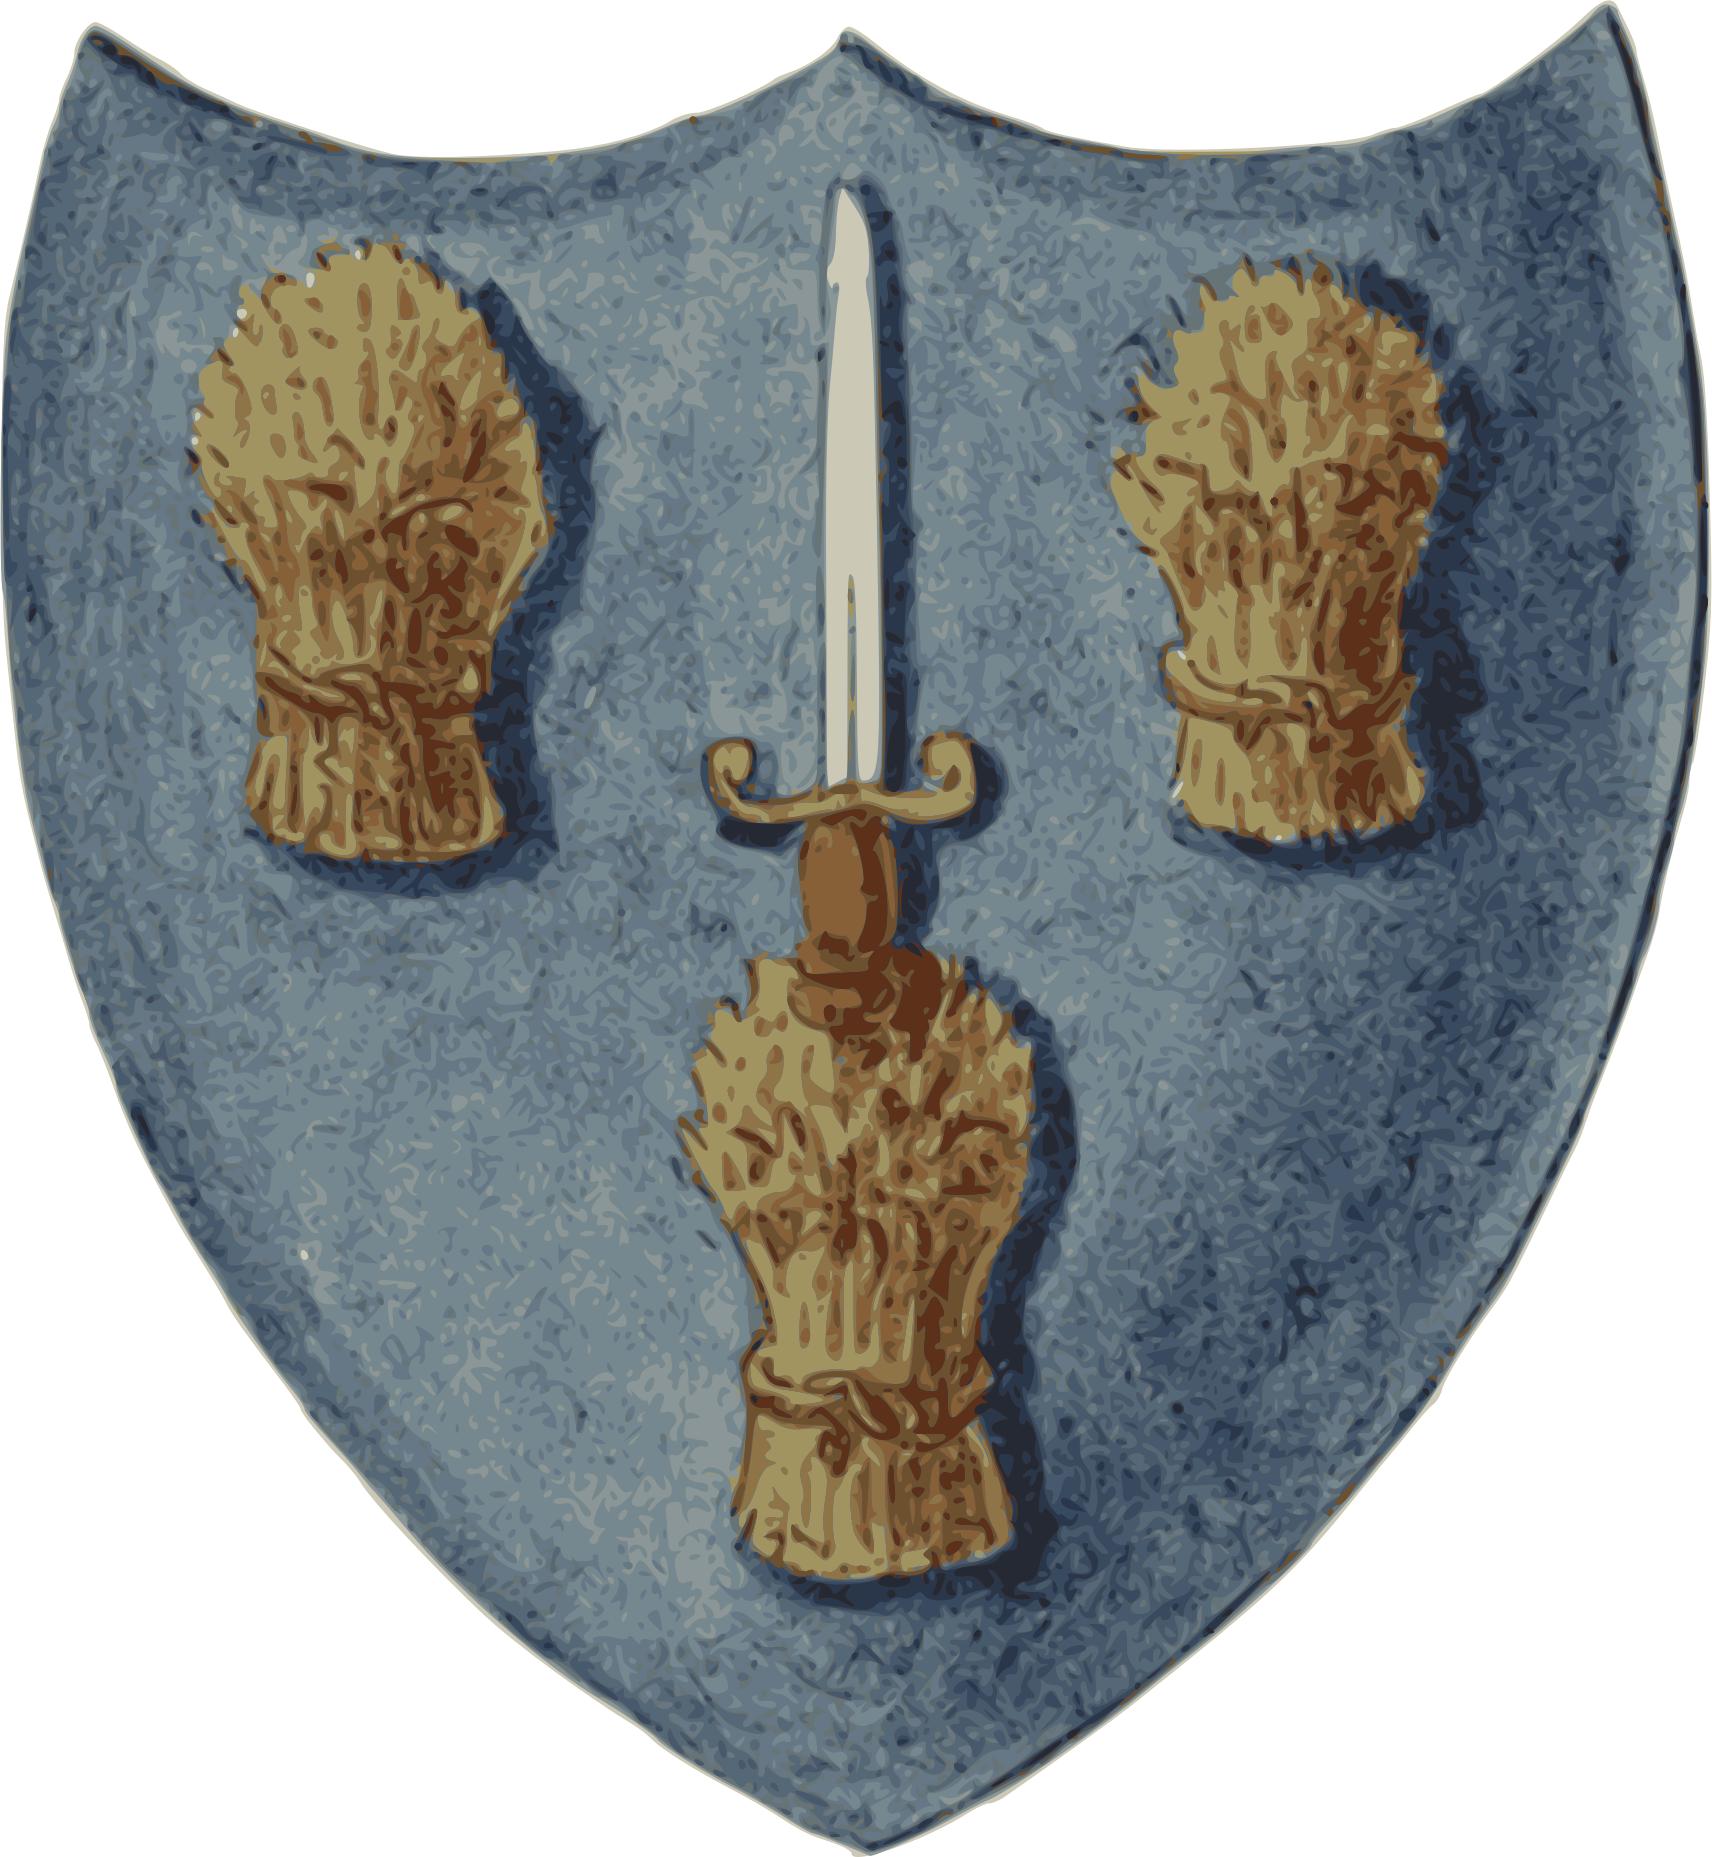 Arfbais Caer | Arms of Chester png